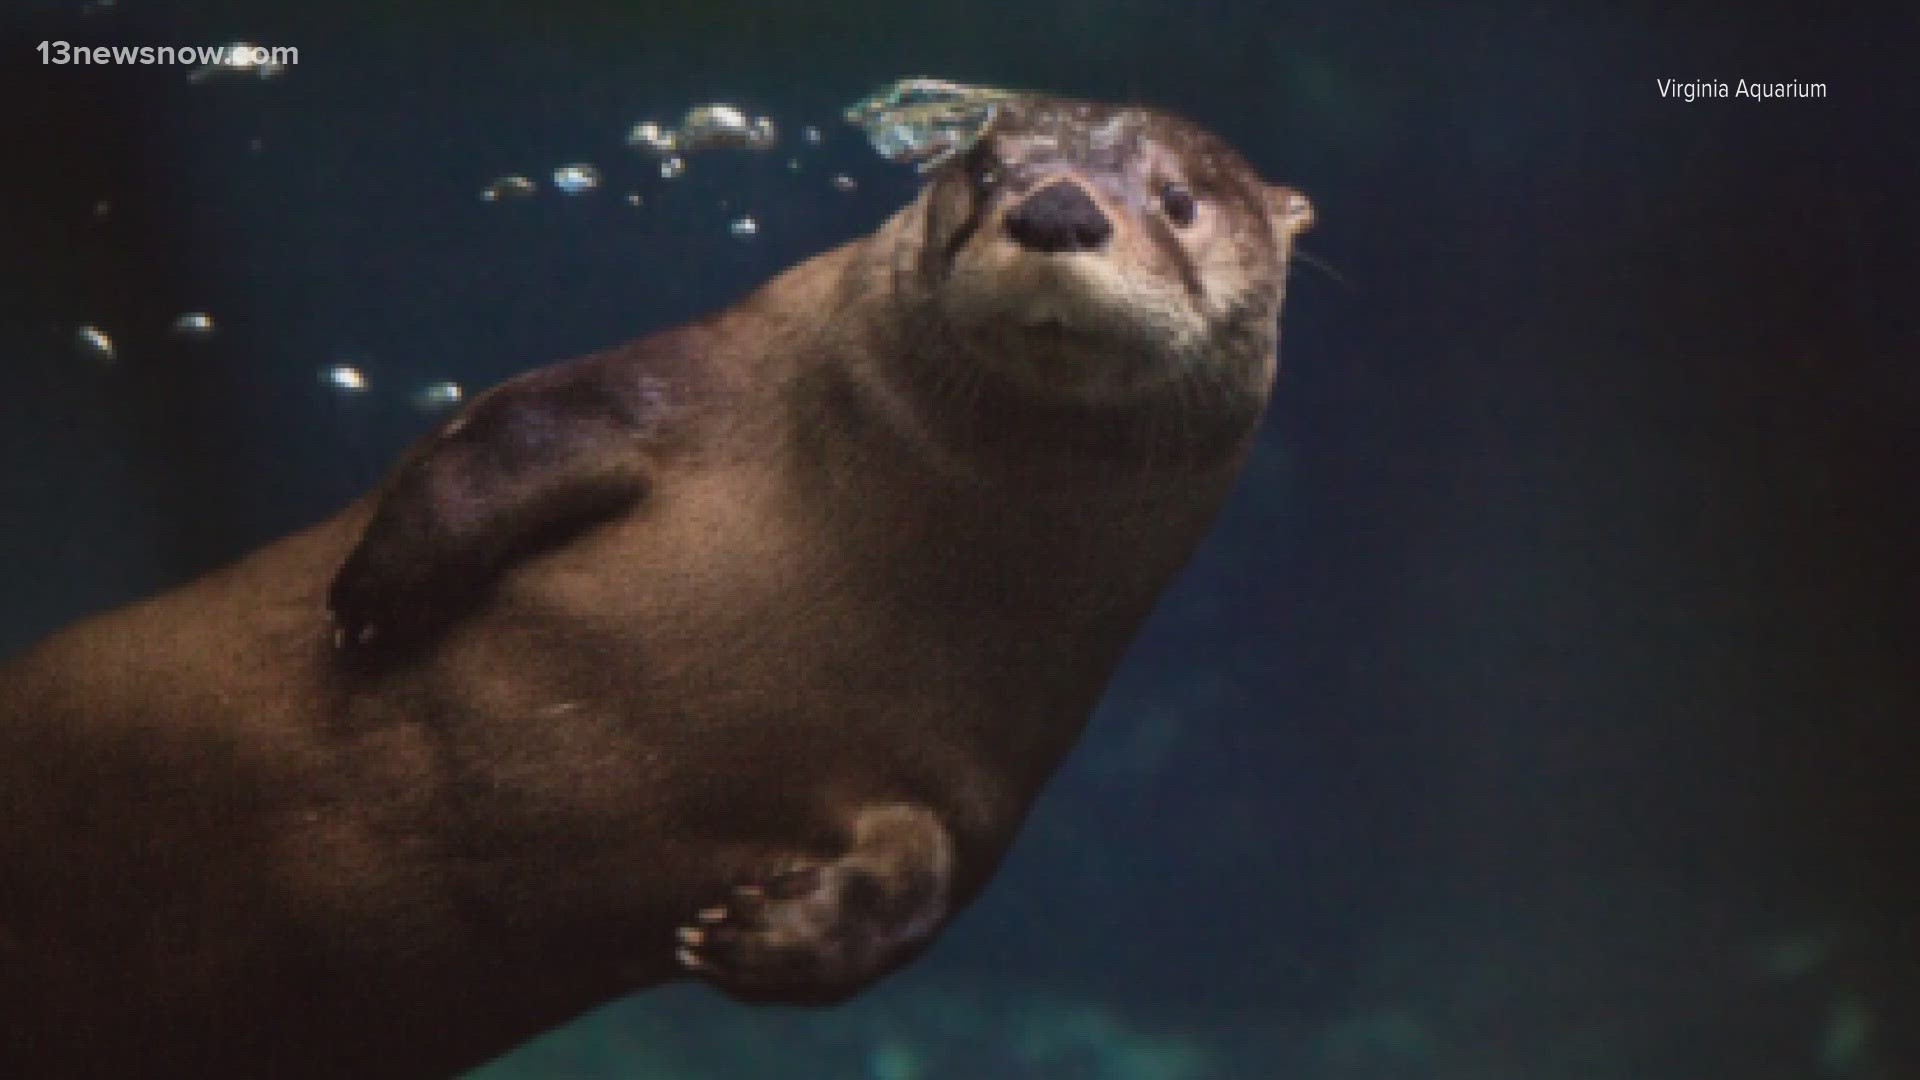 Virginia Aquarium’s North American river otter, Sheldon, passed away.